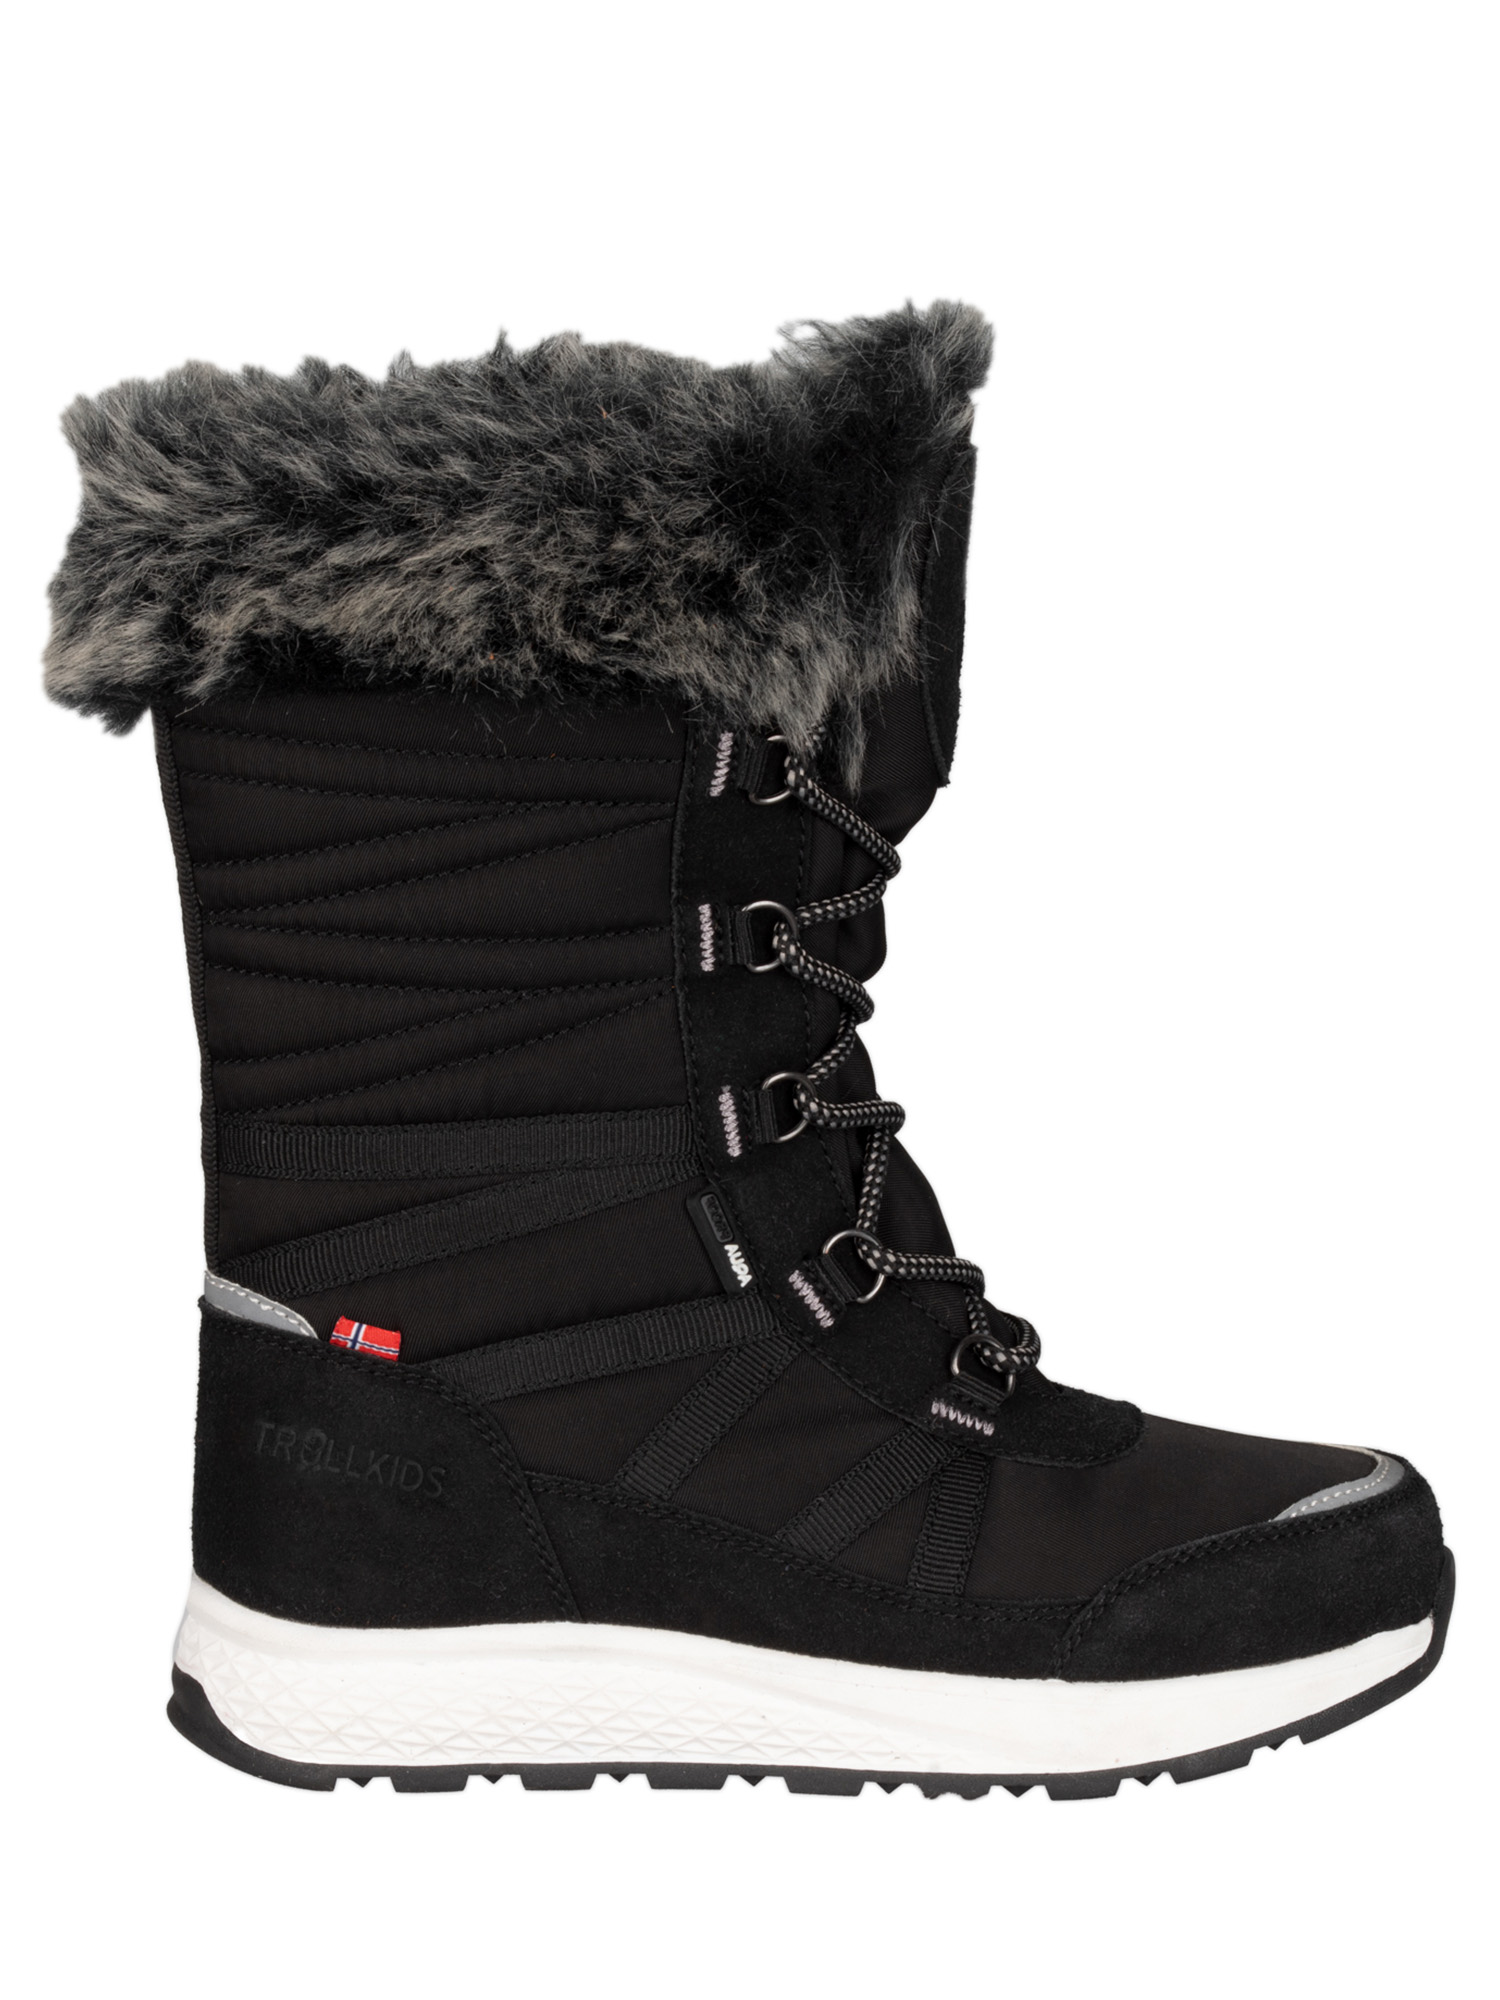 Ботинки Trollkids Girls Hemsedal Winter Boots Xt, черный, 30